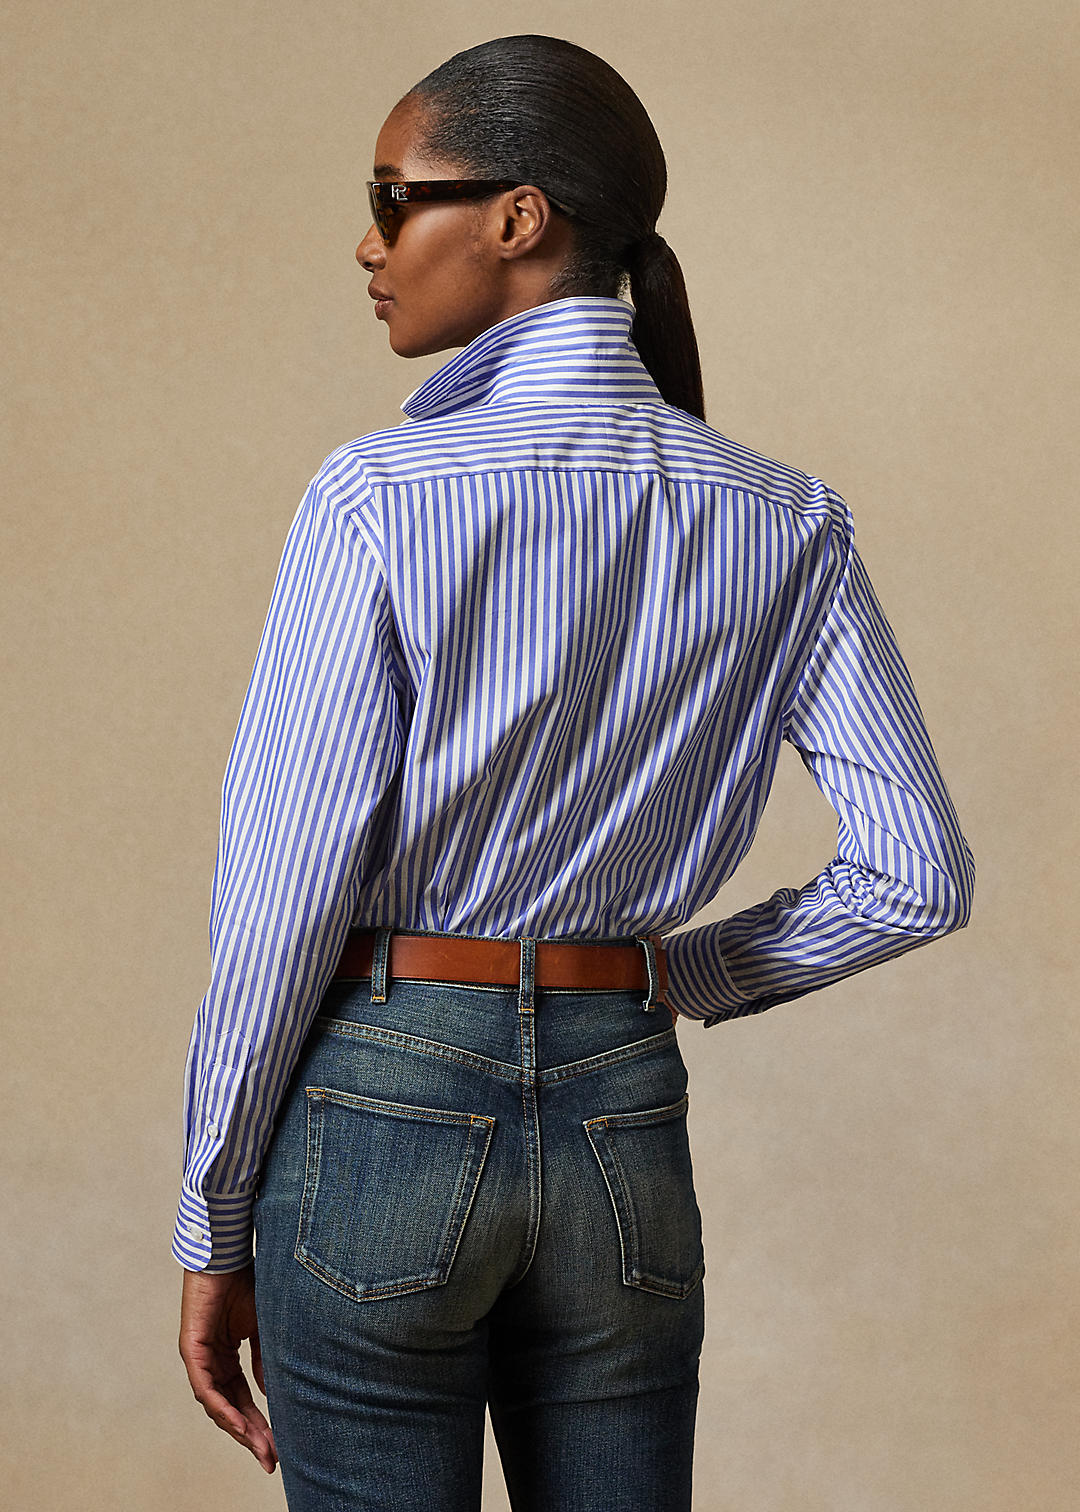 Ralph Lauren Collection Adrien Striped Cotton Shirt 5